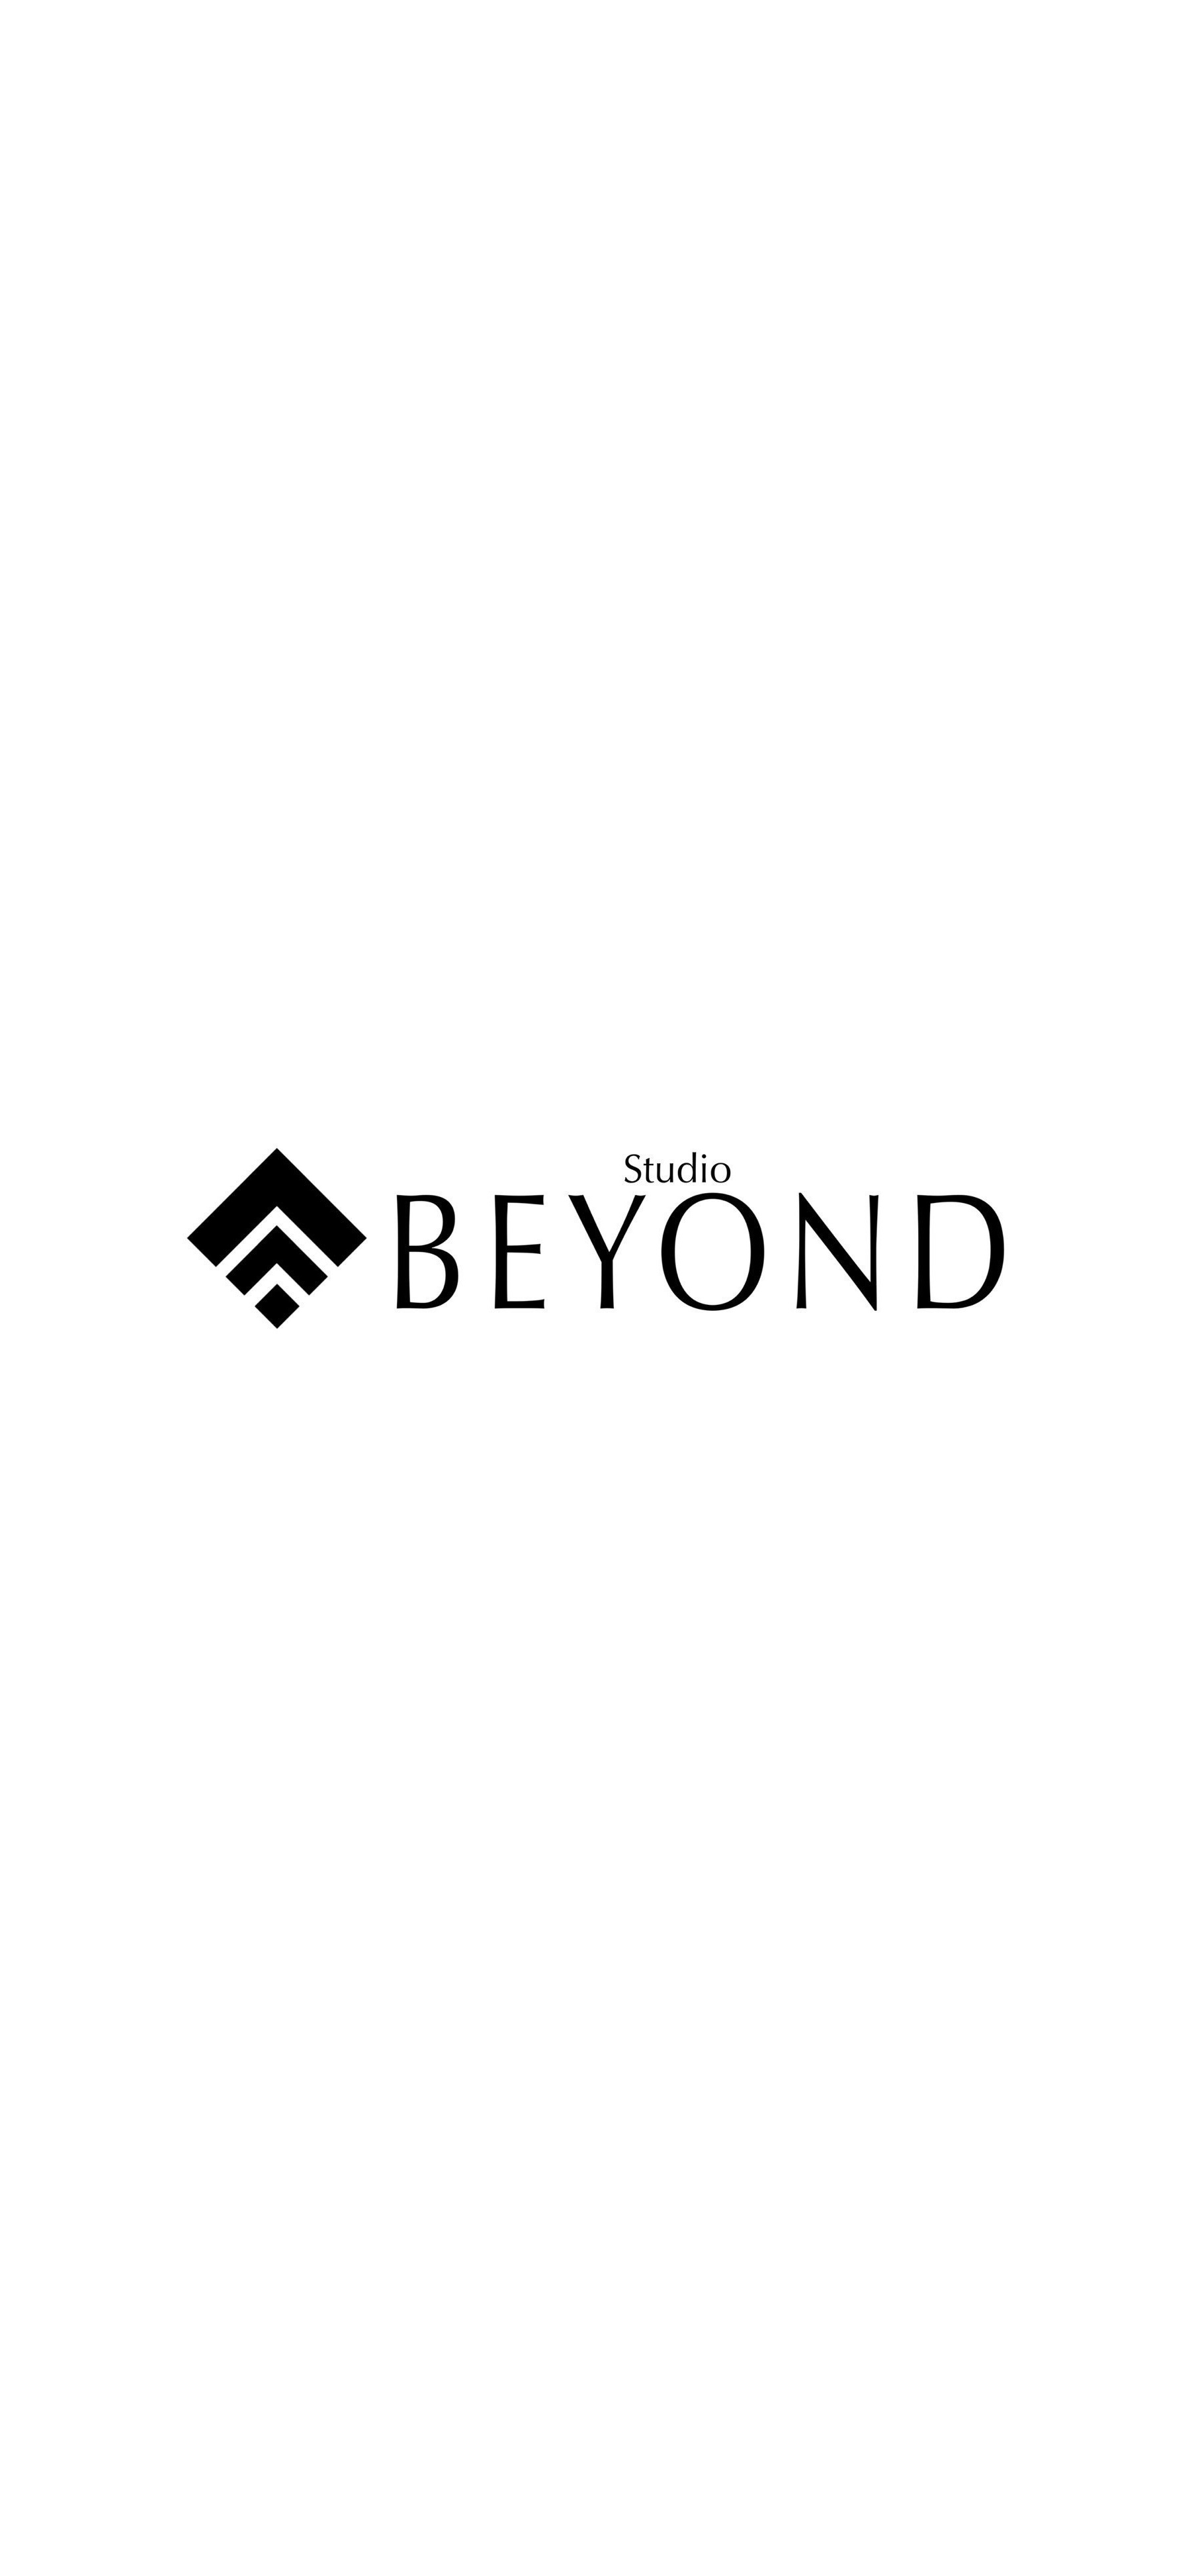 BEYOND-image